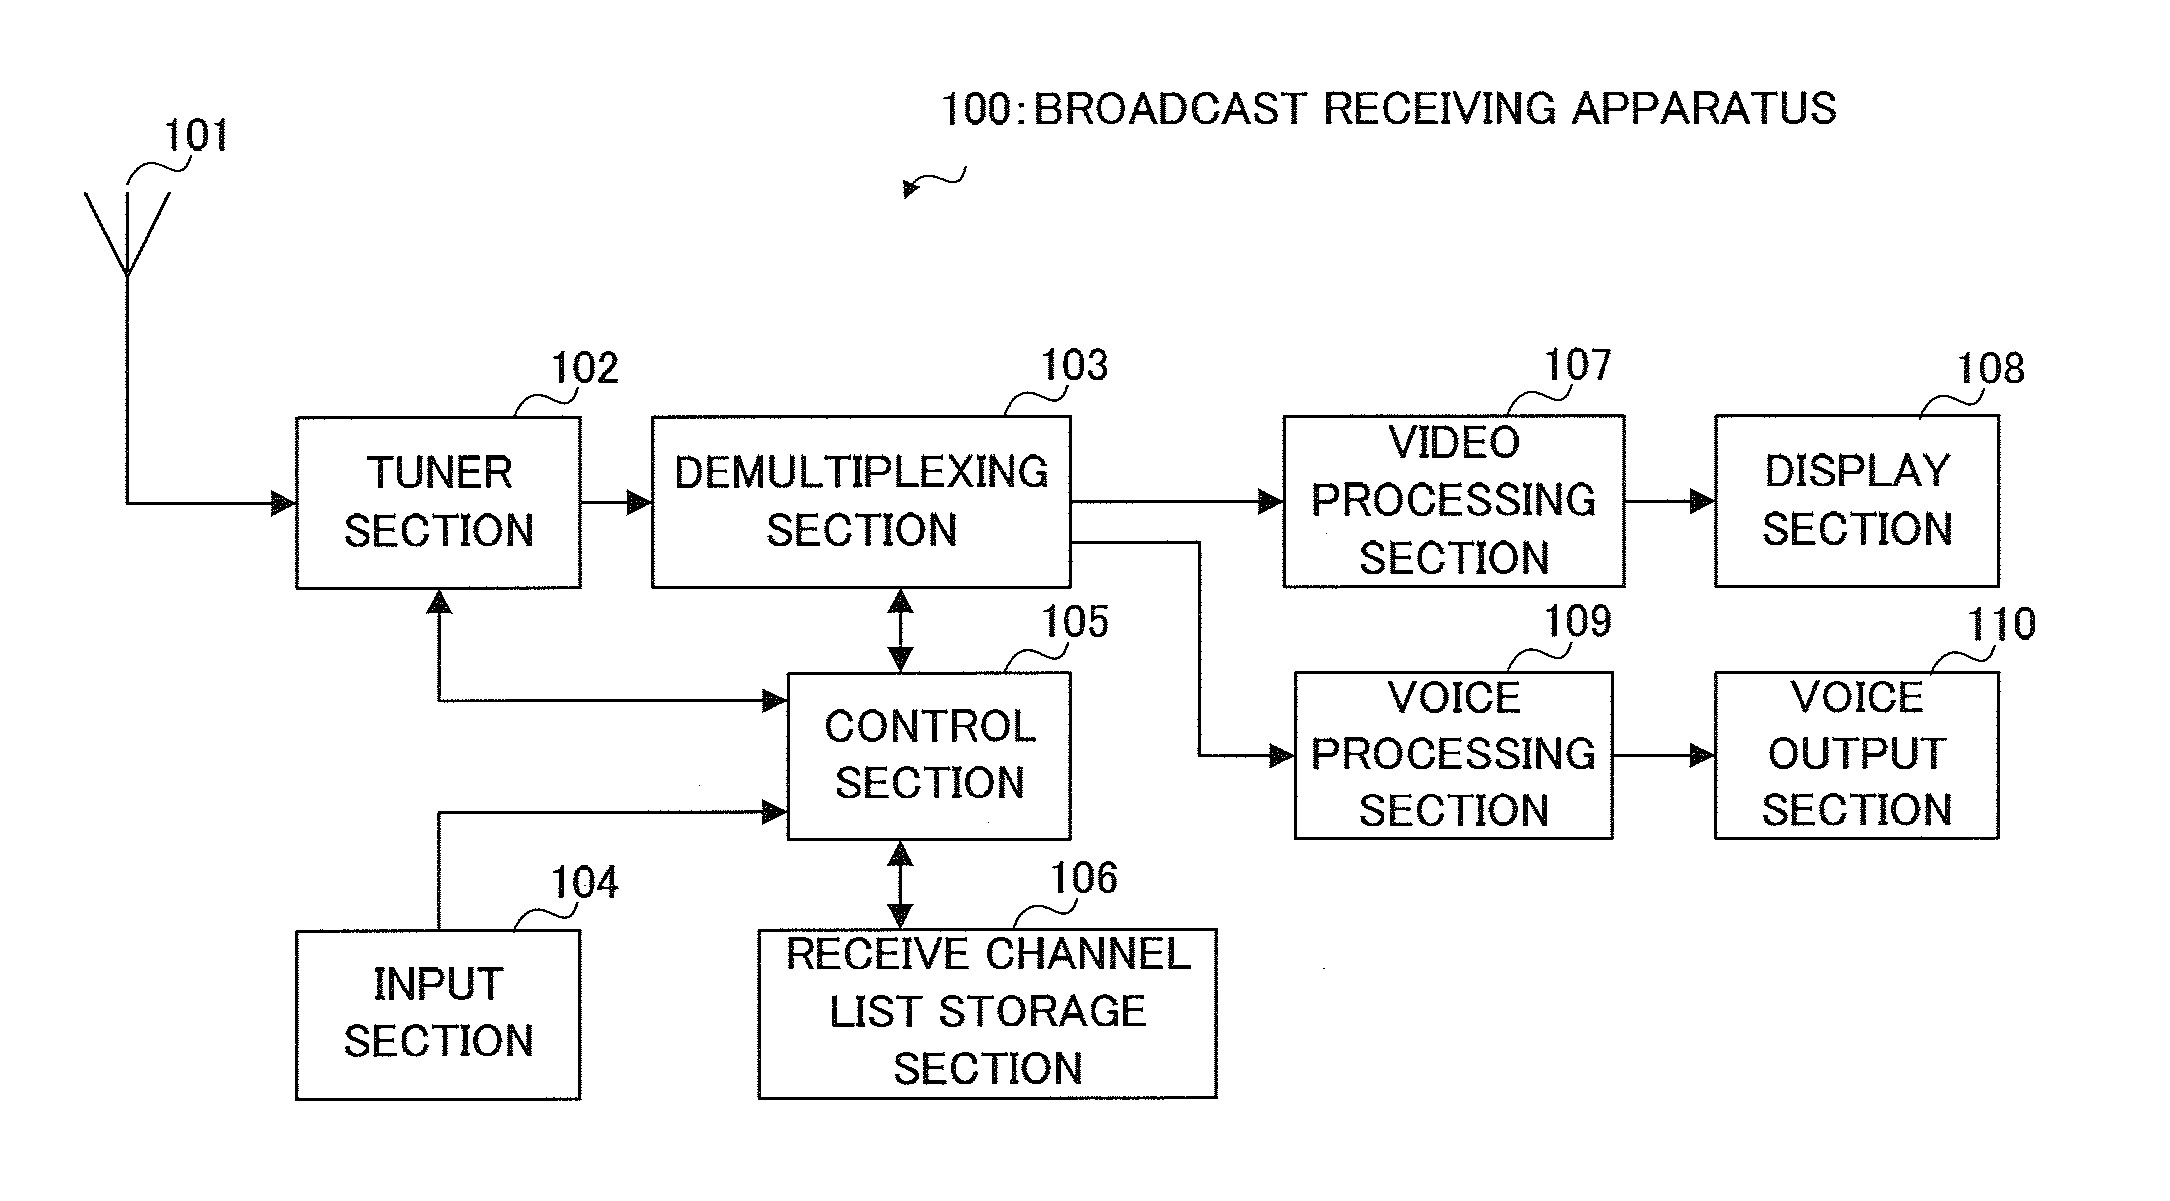 Broadcast Receiving Apparatus